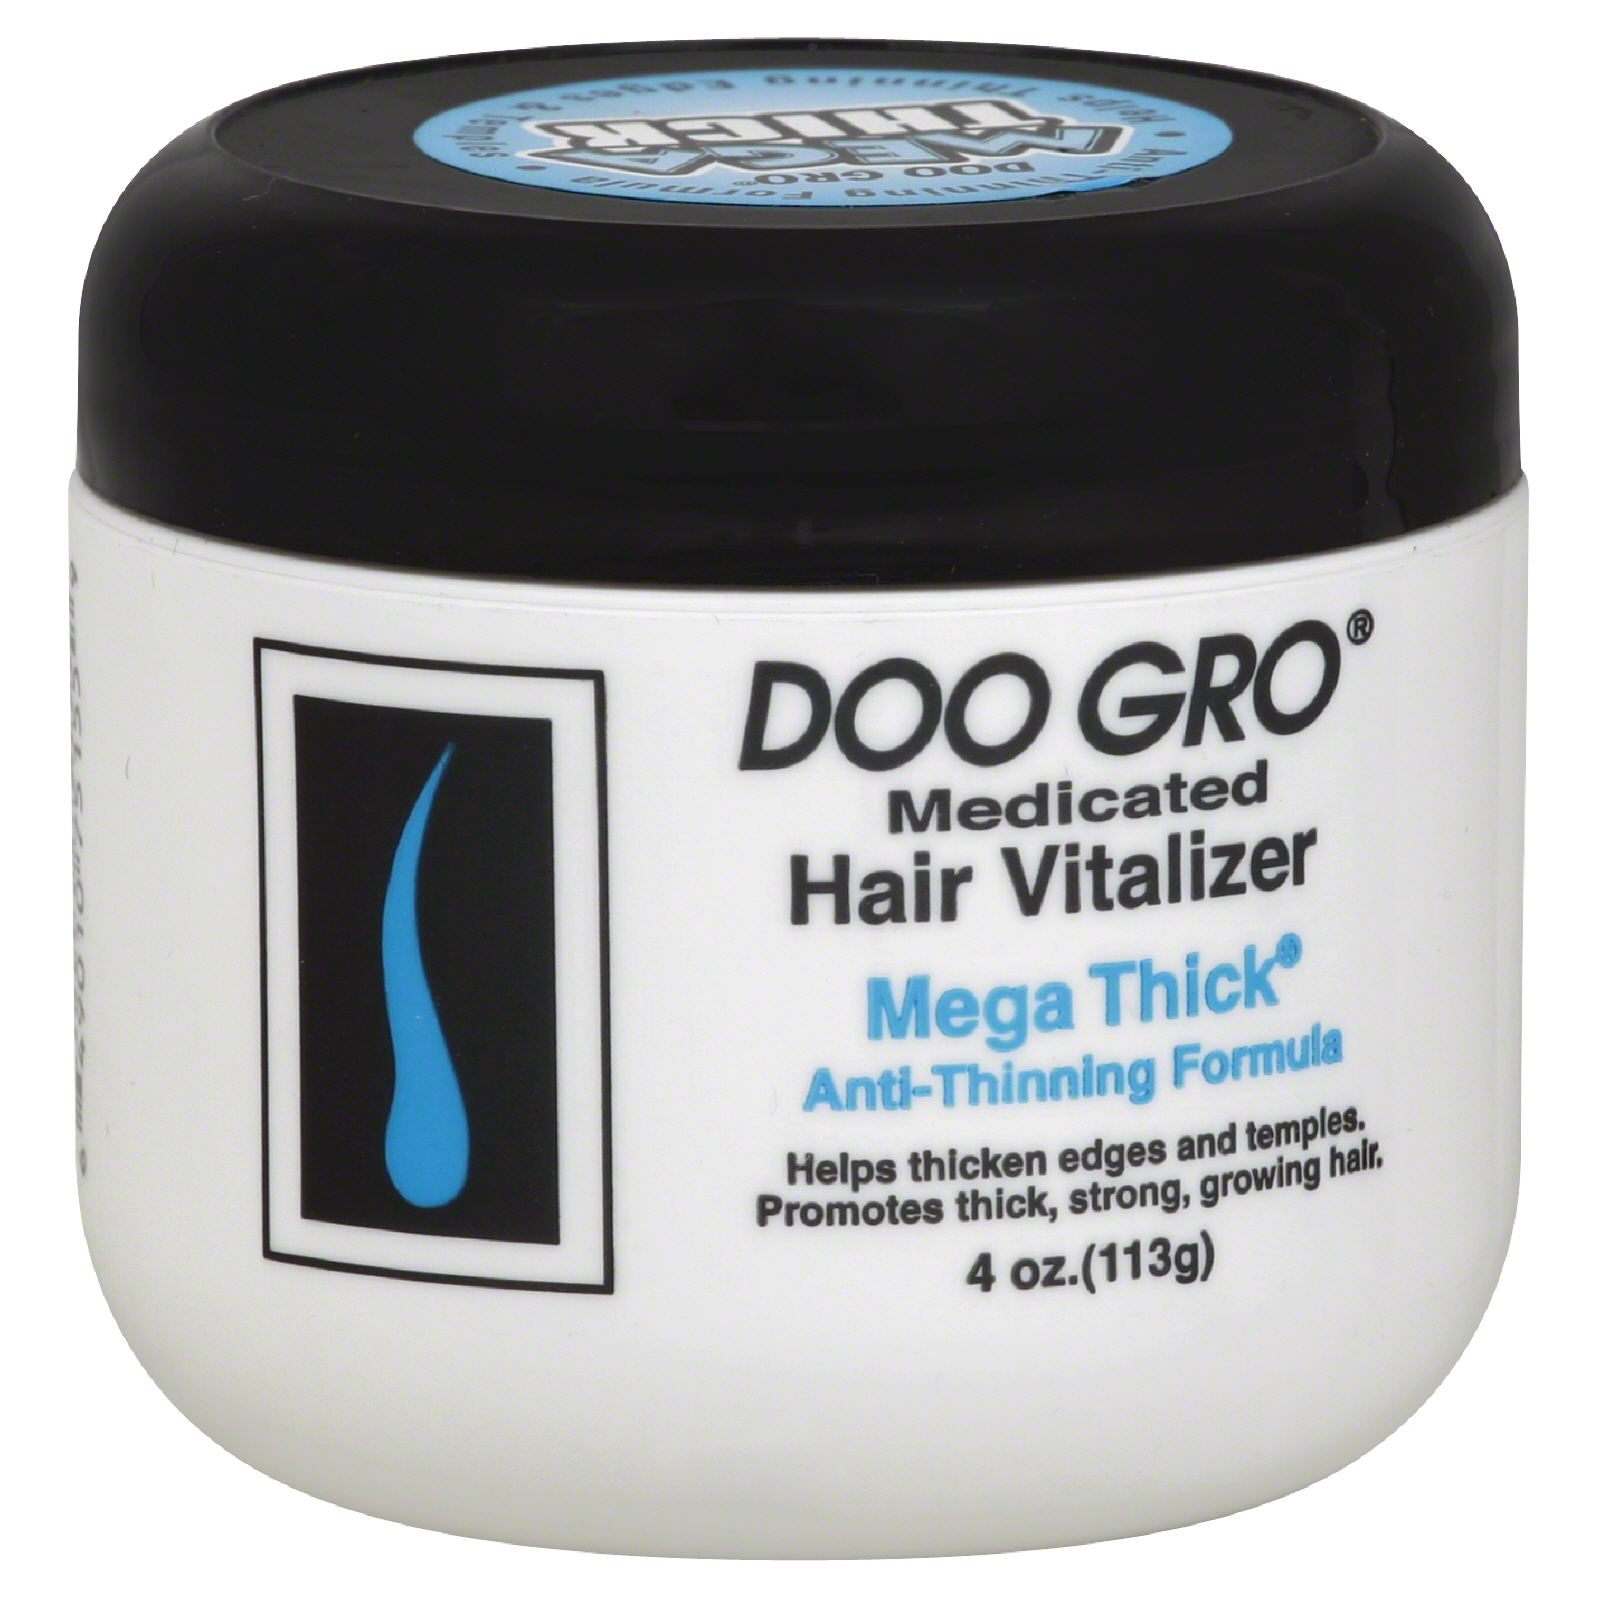 Doo Gro Medicated Hair Vitalizer, Mega Thick Anti Thinning Formula, 4 oz (113 g)